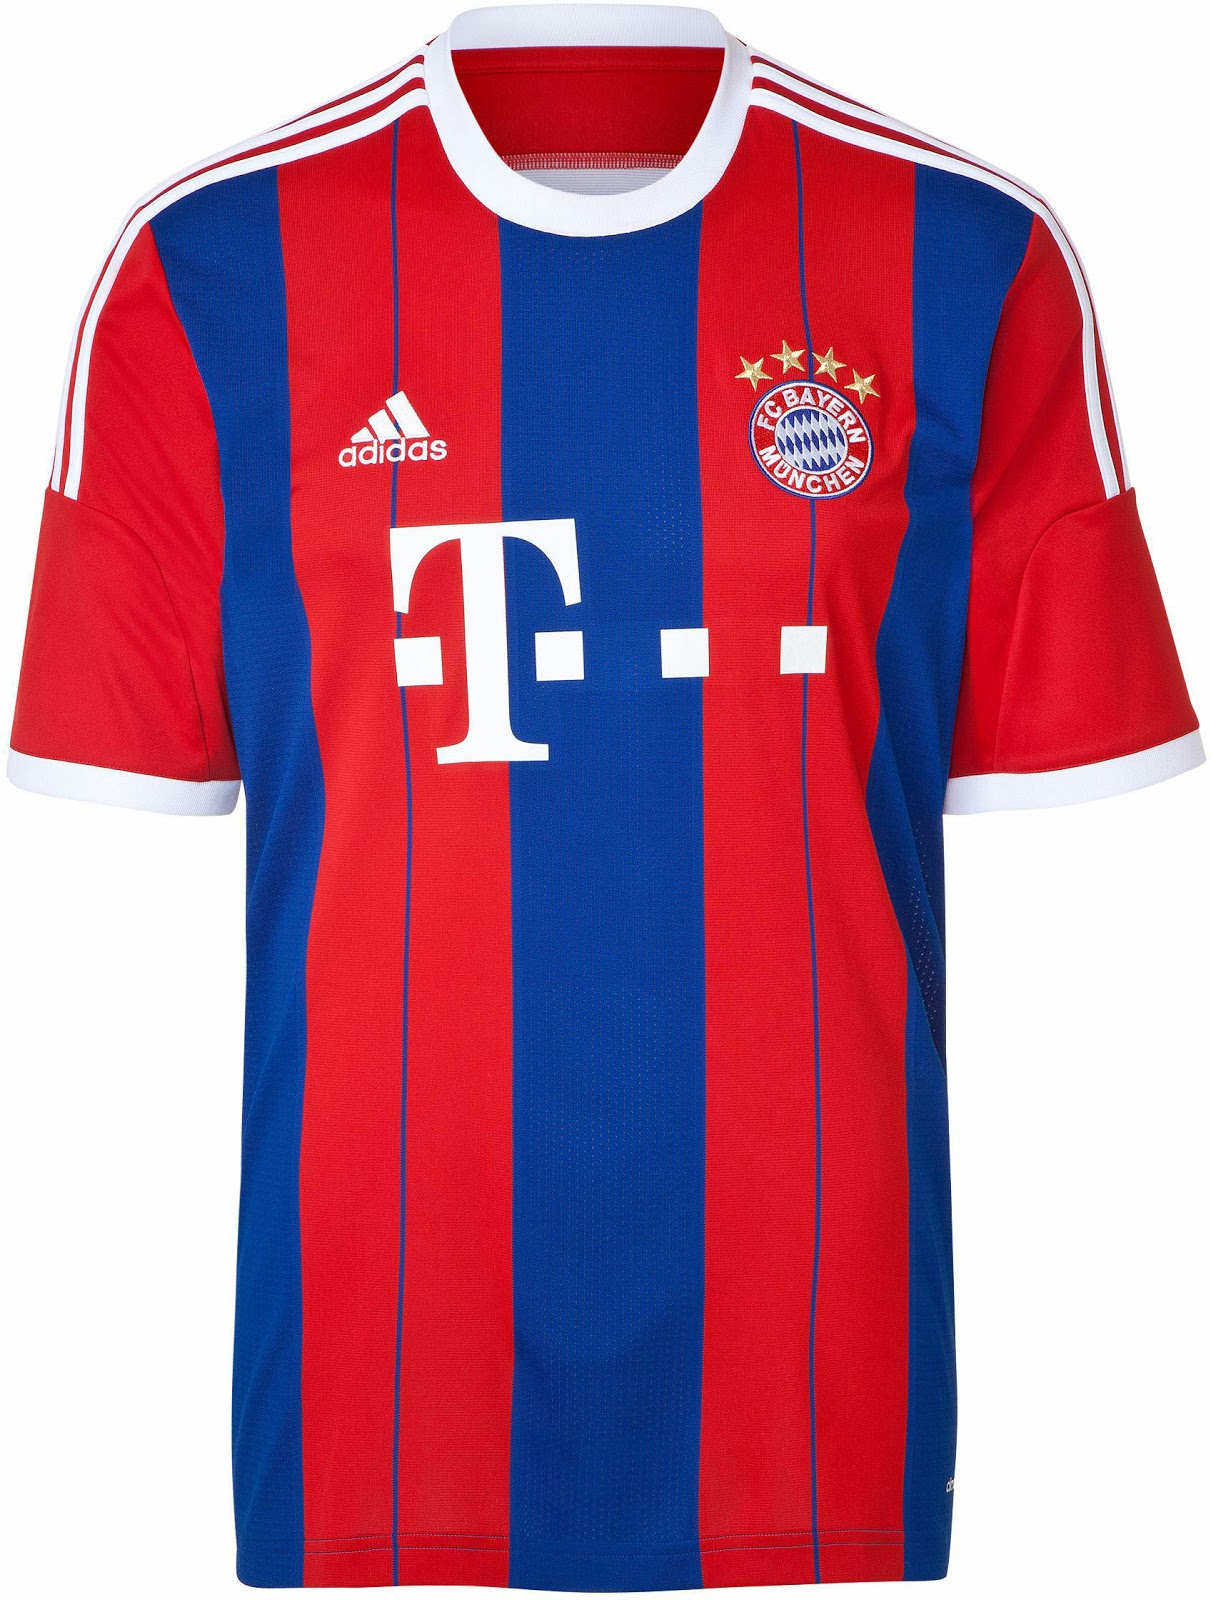 Flagwigs Fc Bayern Munchen Home Jersey Shirt Kit 2014 2015 Have A Fun Flag Wig